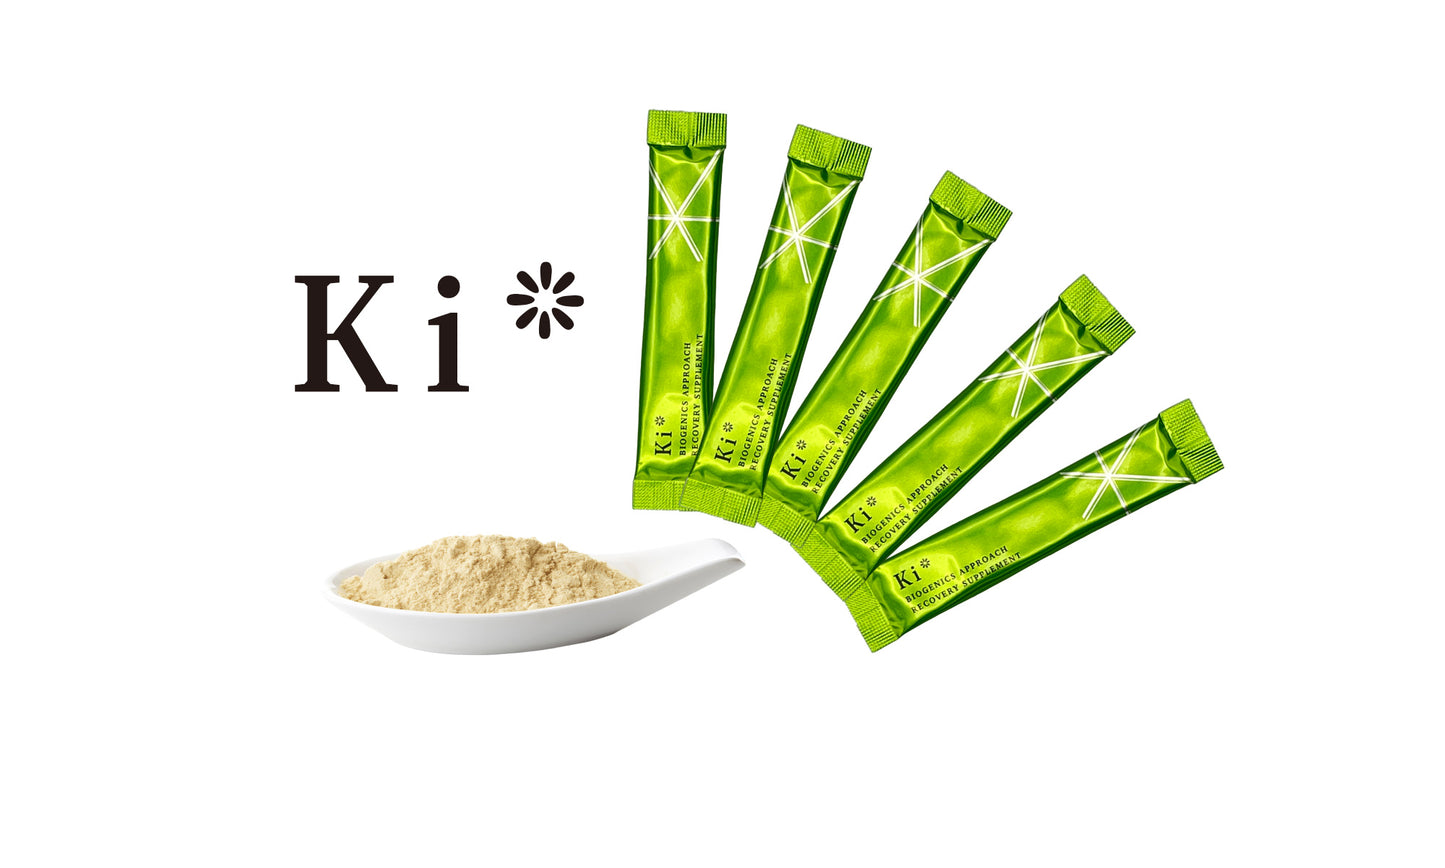 Ki* (Ki-asterisk) Recovery Supplement